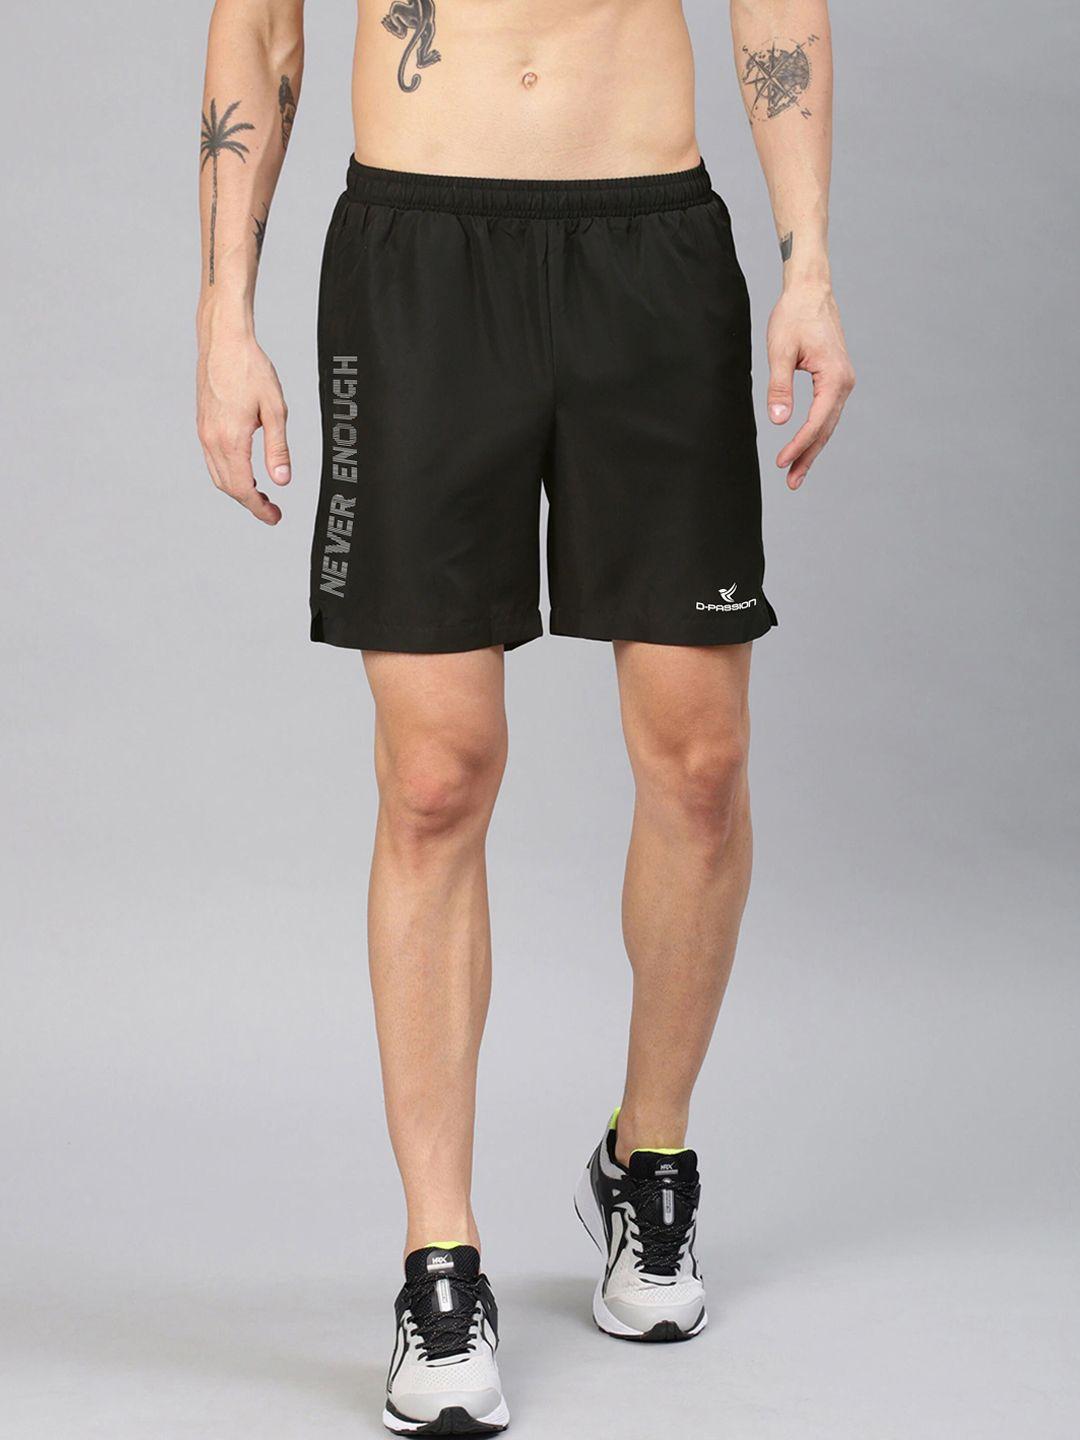 dpassion men black rapid-dry running sports shorts